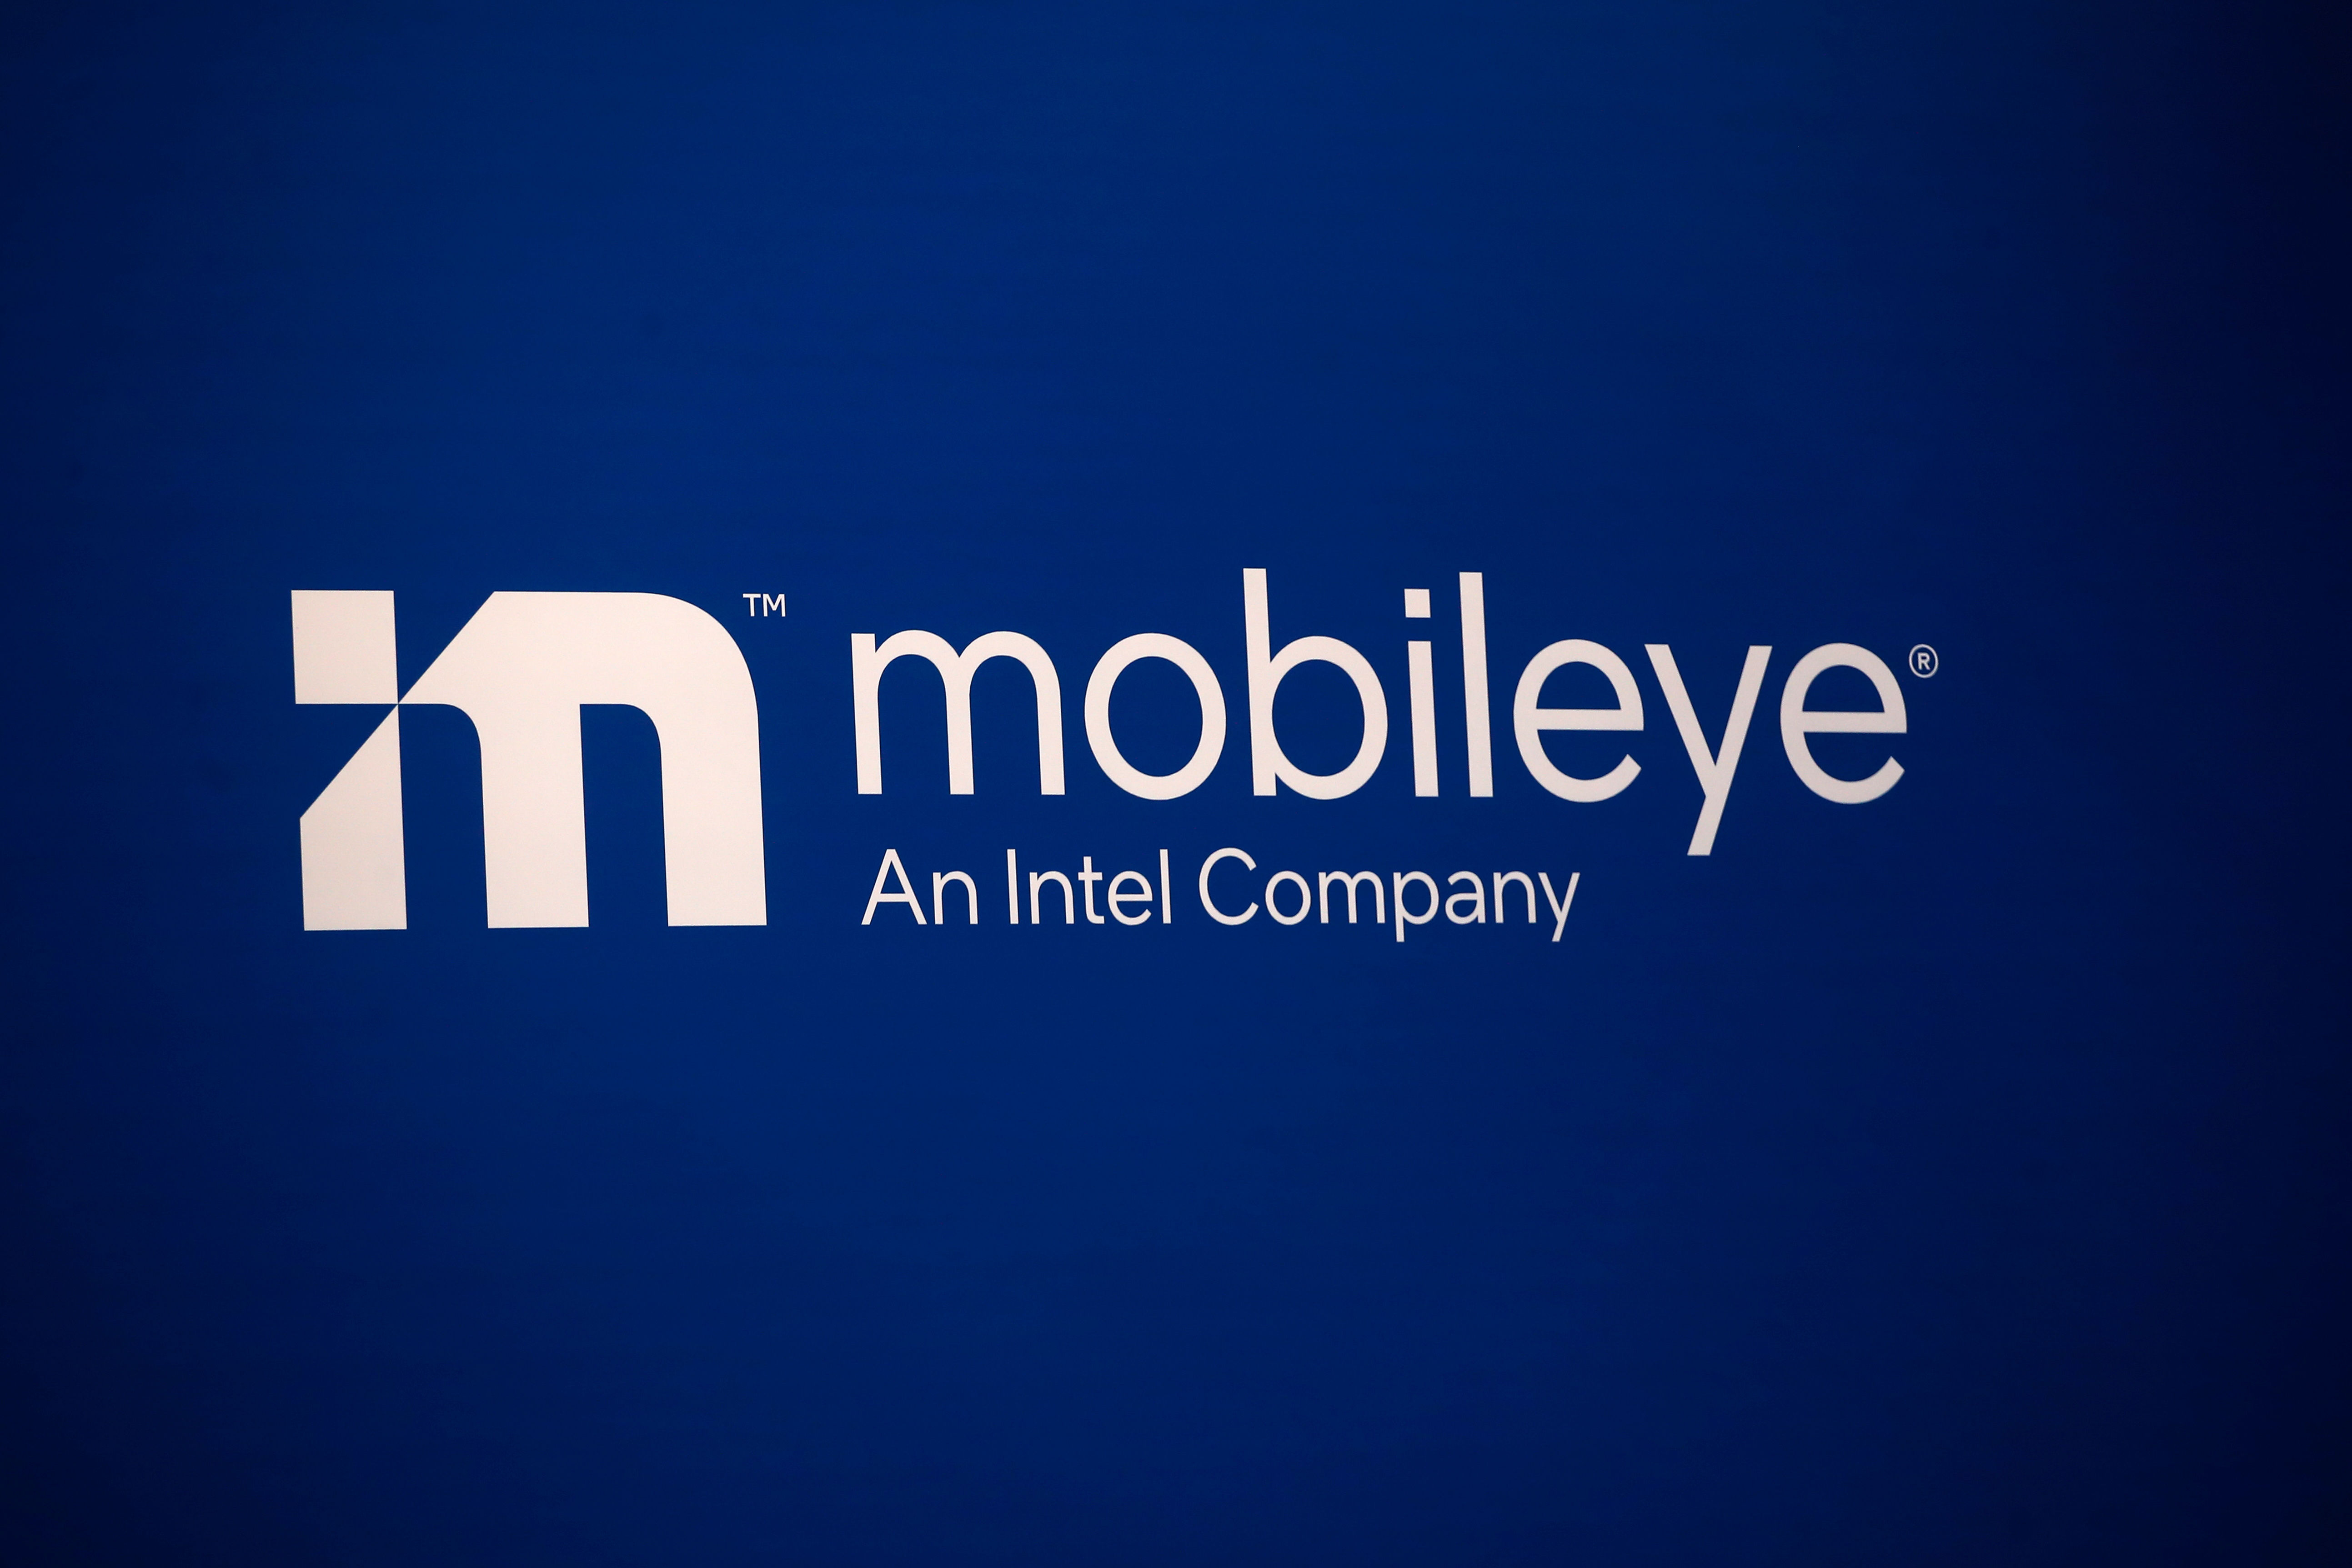 Intel Mobileye stock forex trading simulator